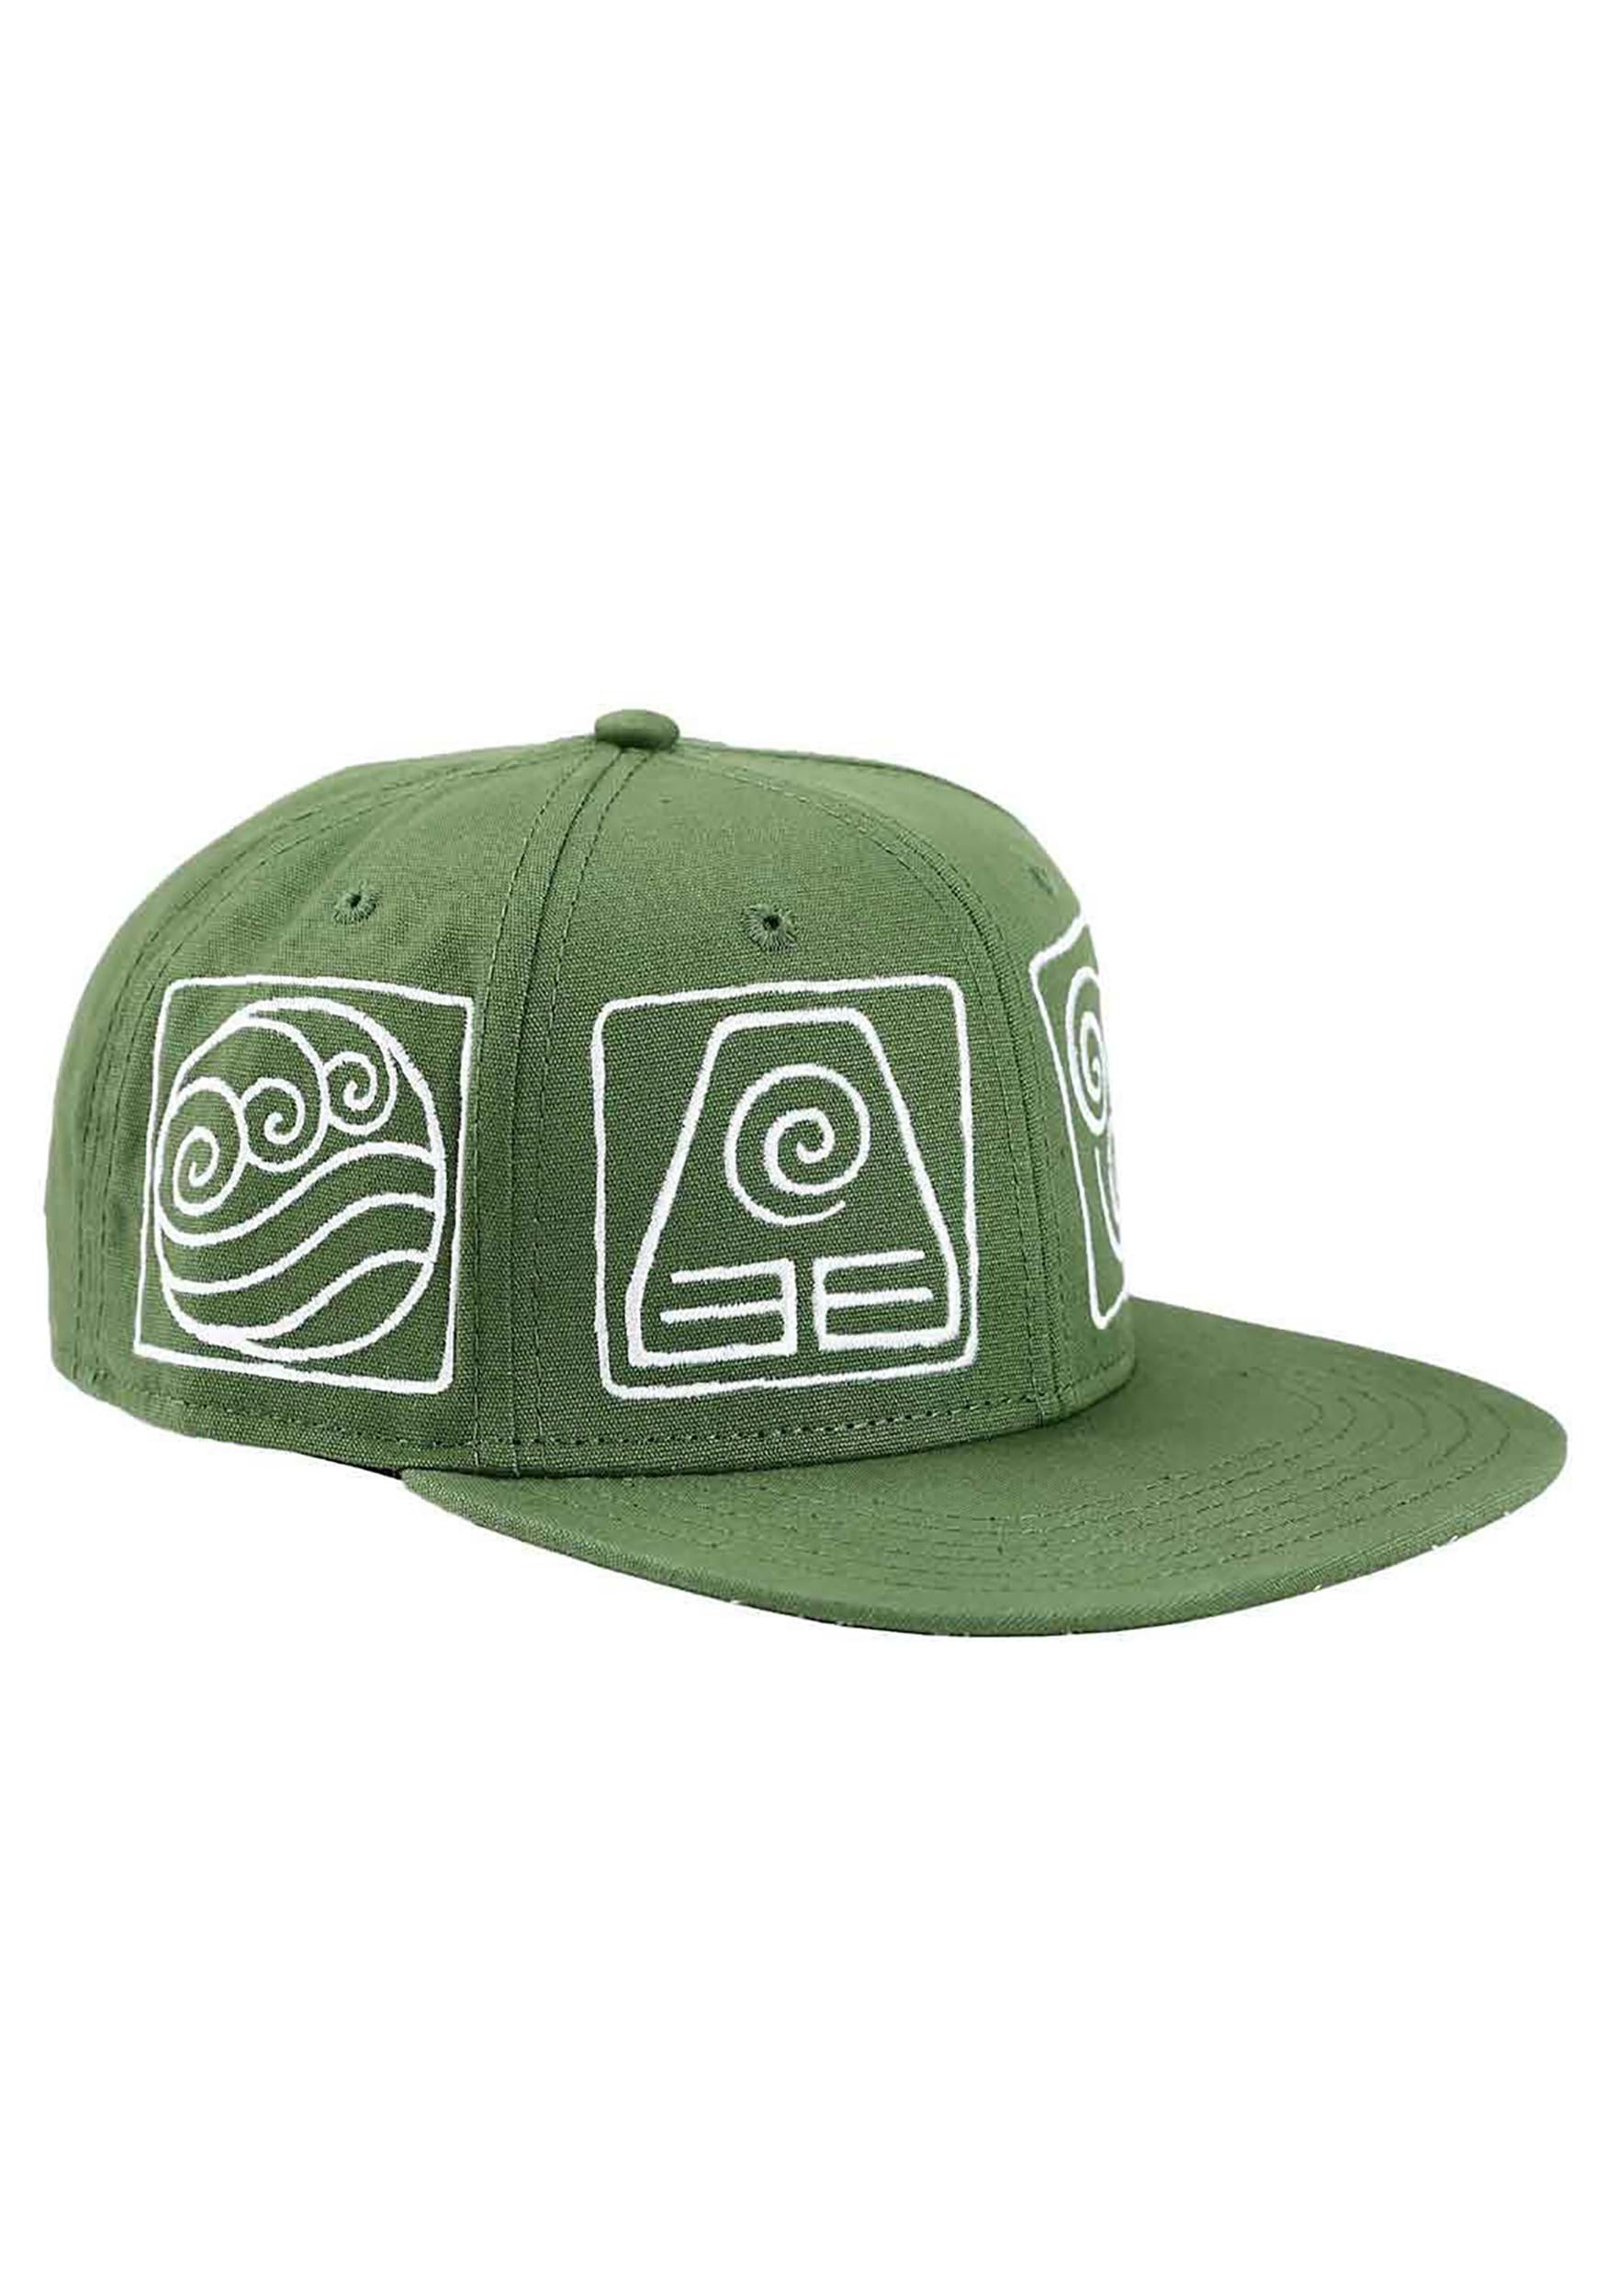 Elemental Symbols Avatar The Last Airbender  Flat Bill Snapback Hat